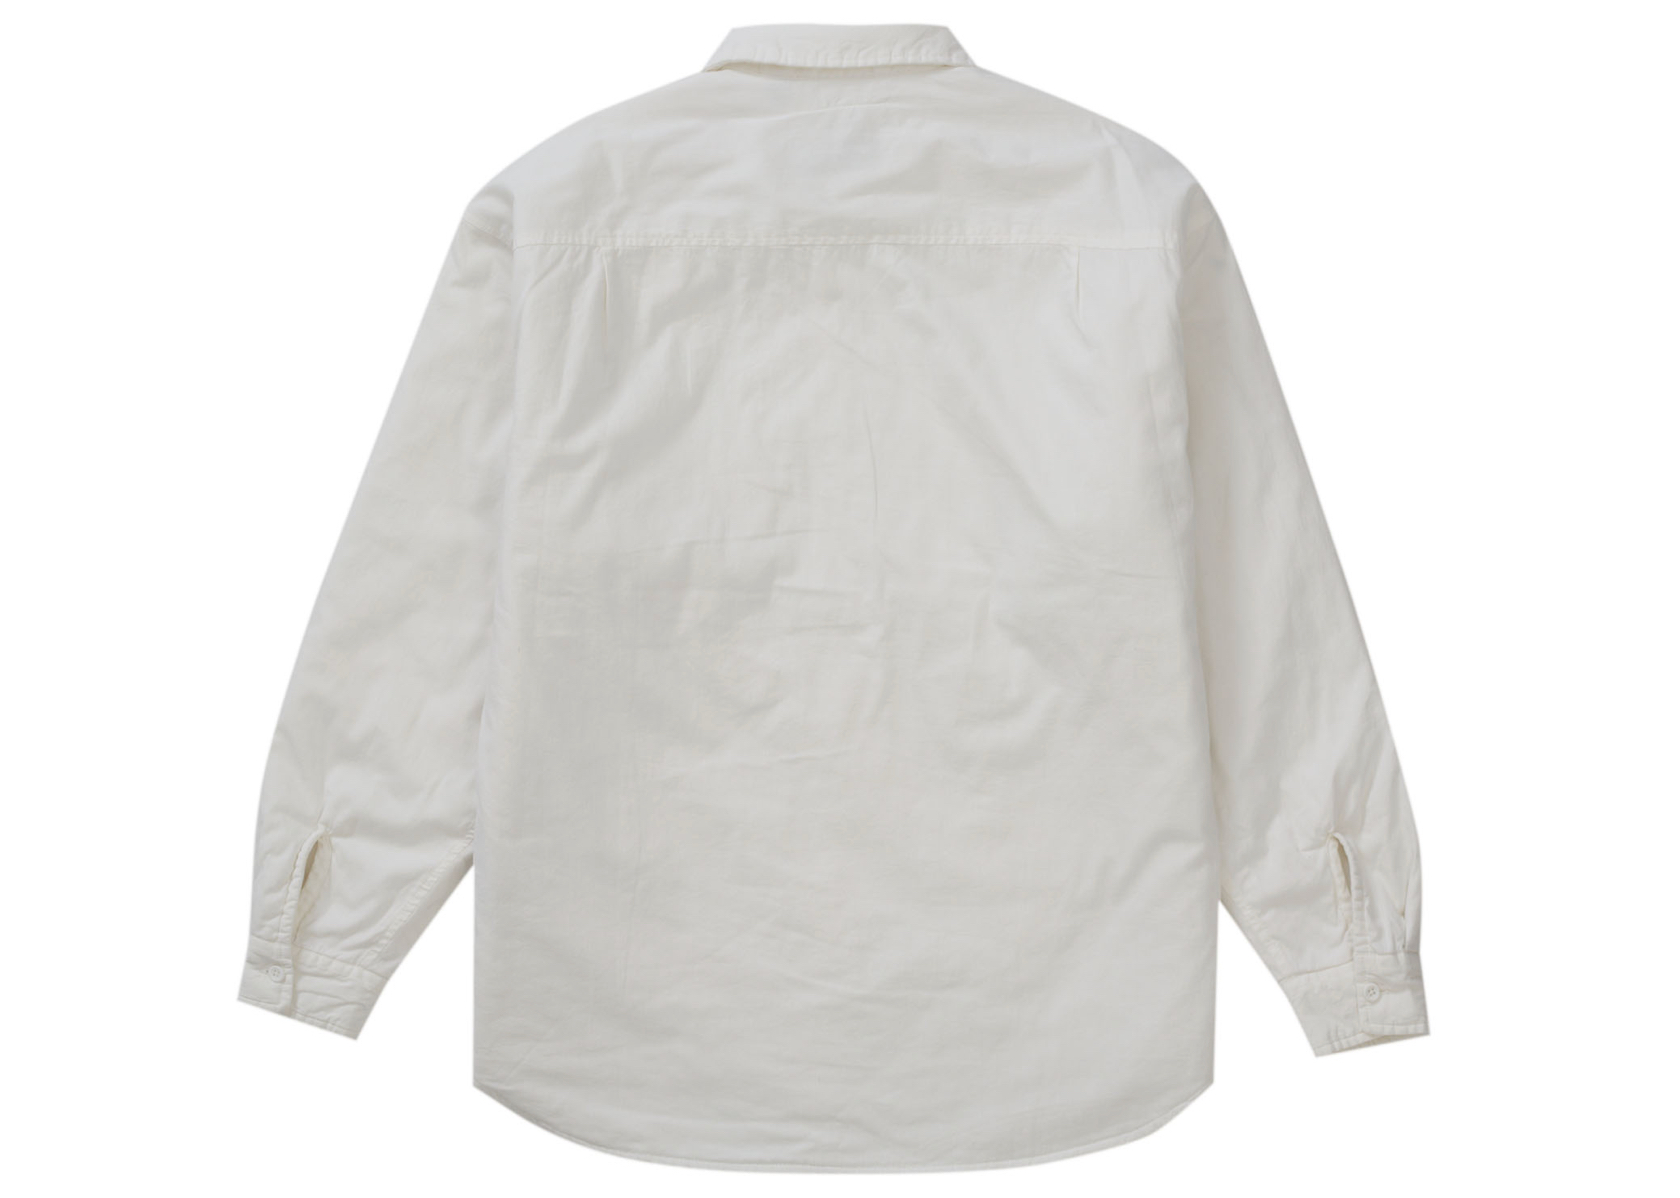 Supreme x MM6 Padded Shirt White4万円で即決は可能でしょうか